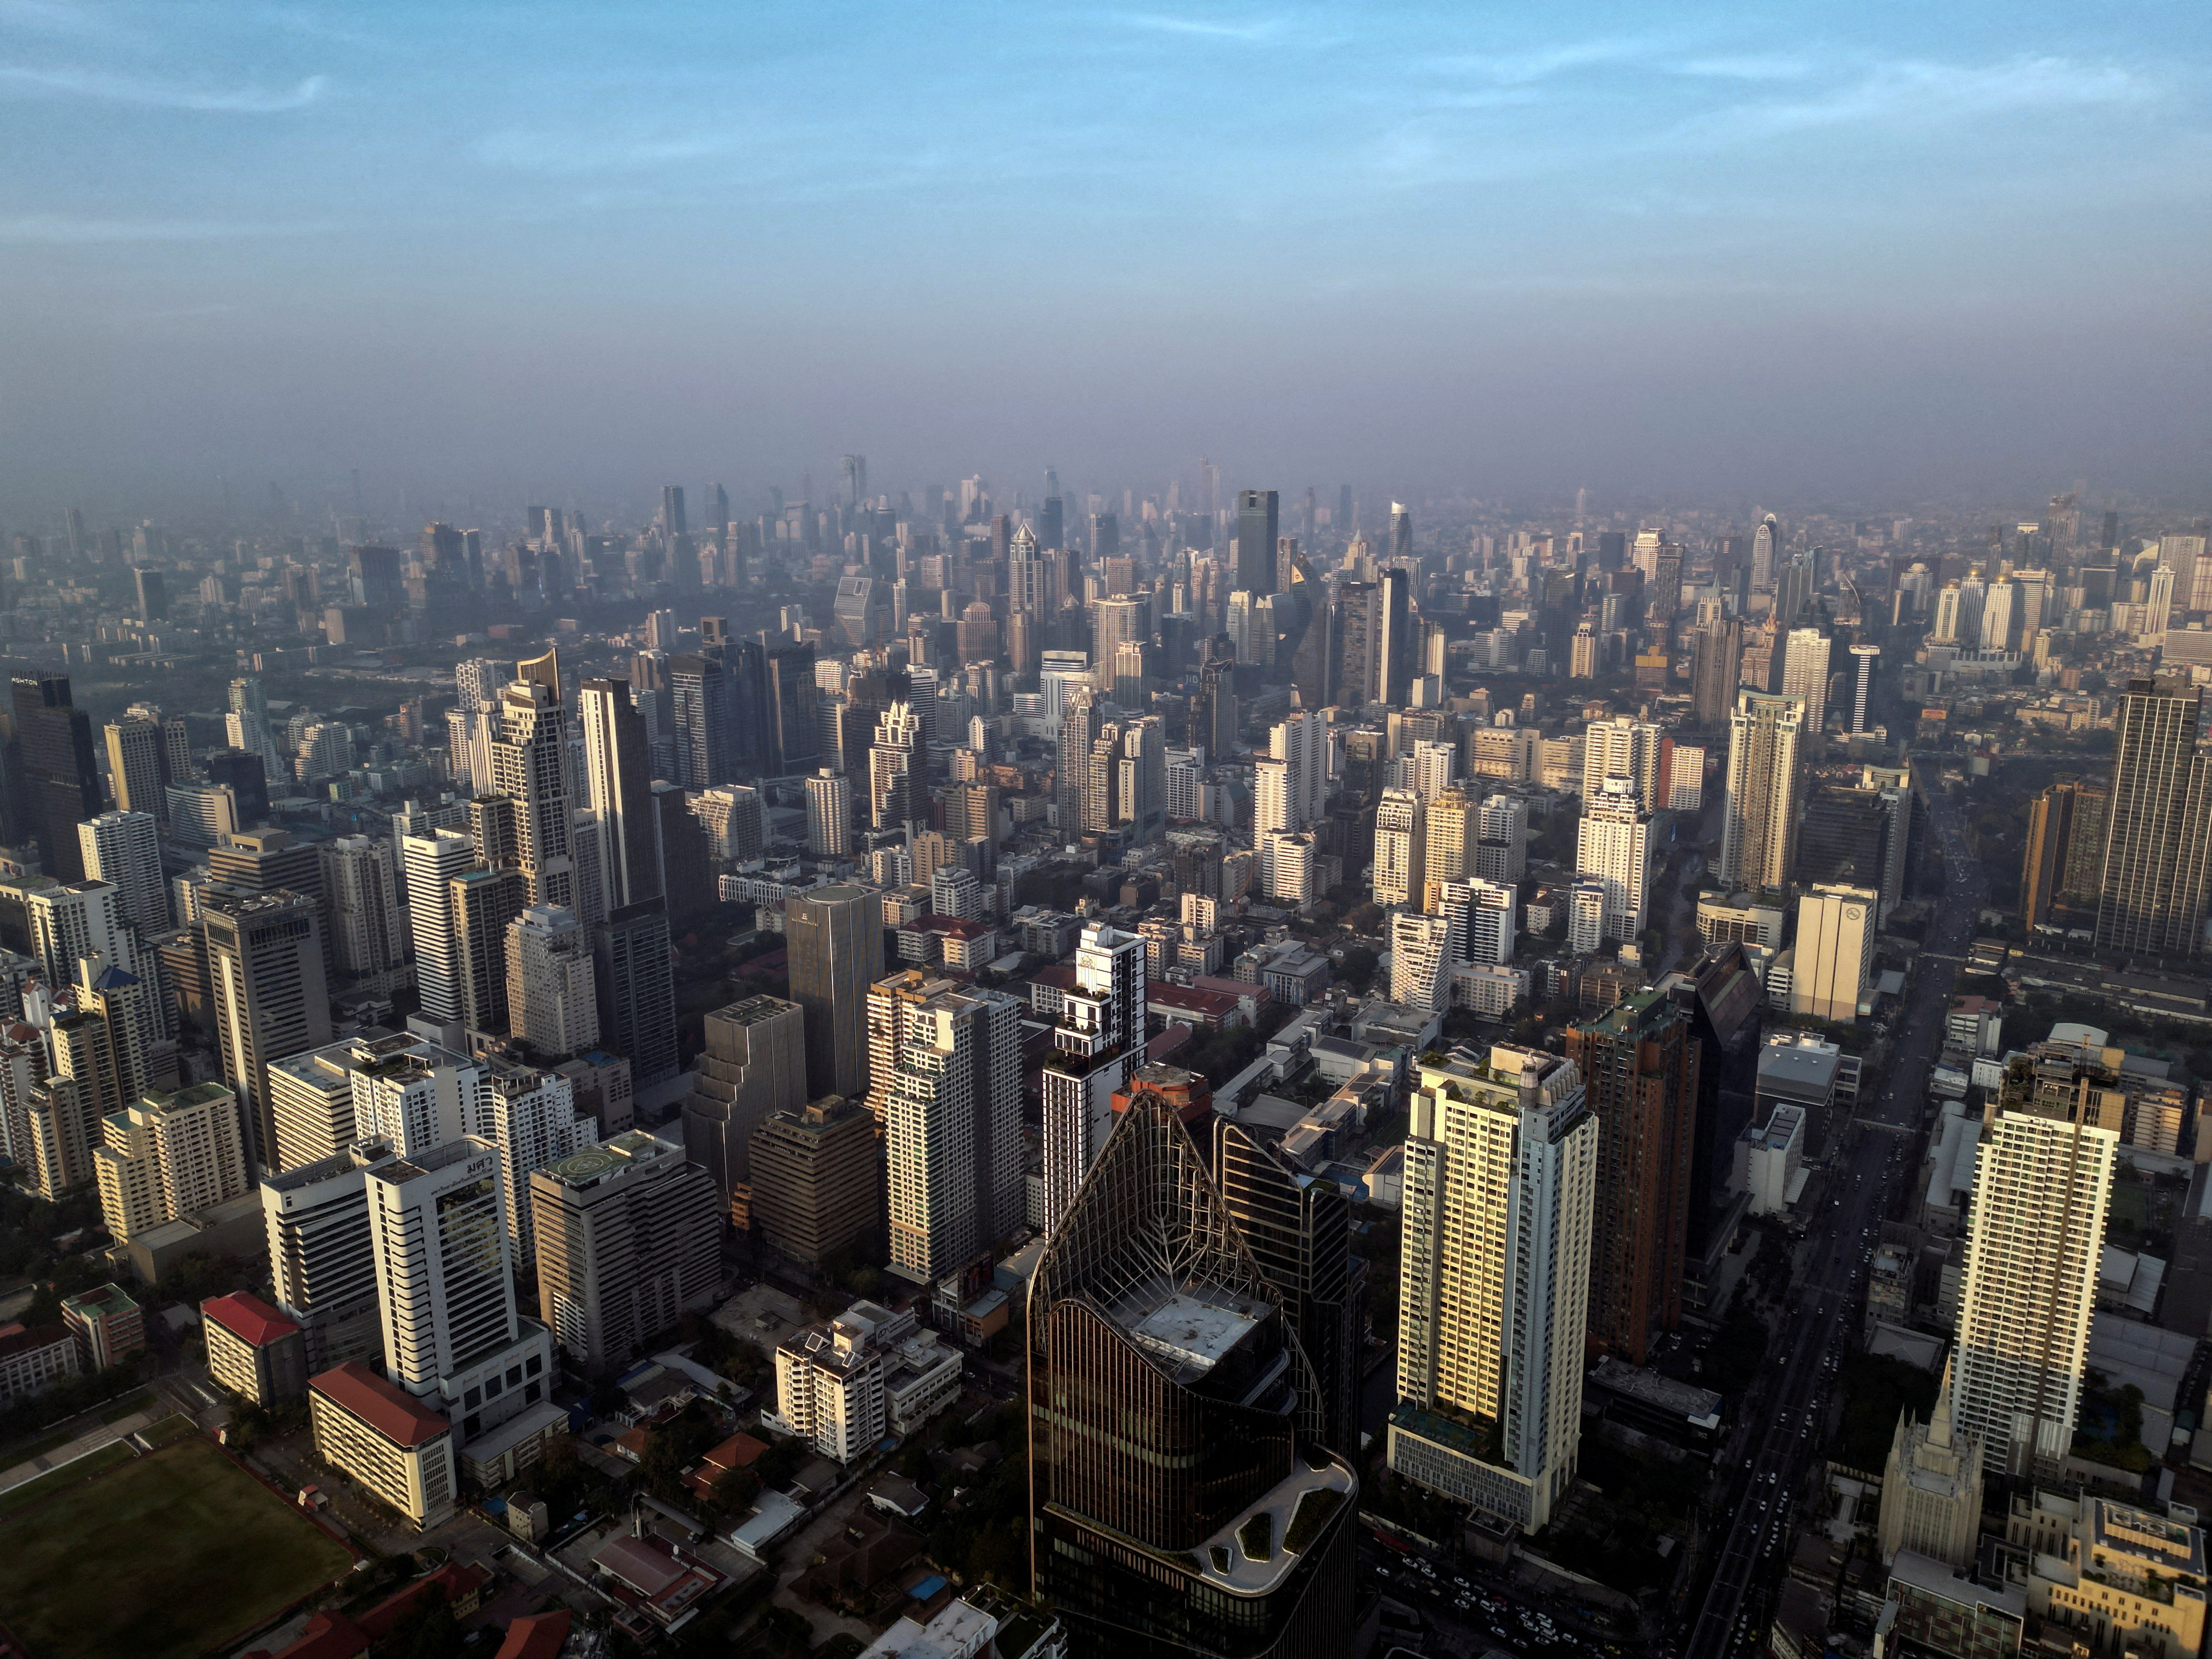 An aerial view shows a cityscape in Bangkok, Thailand